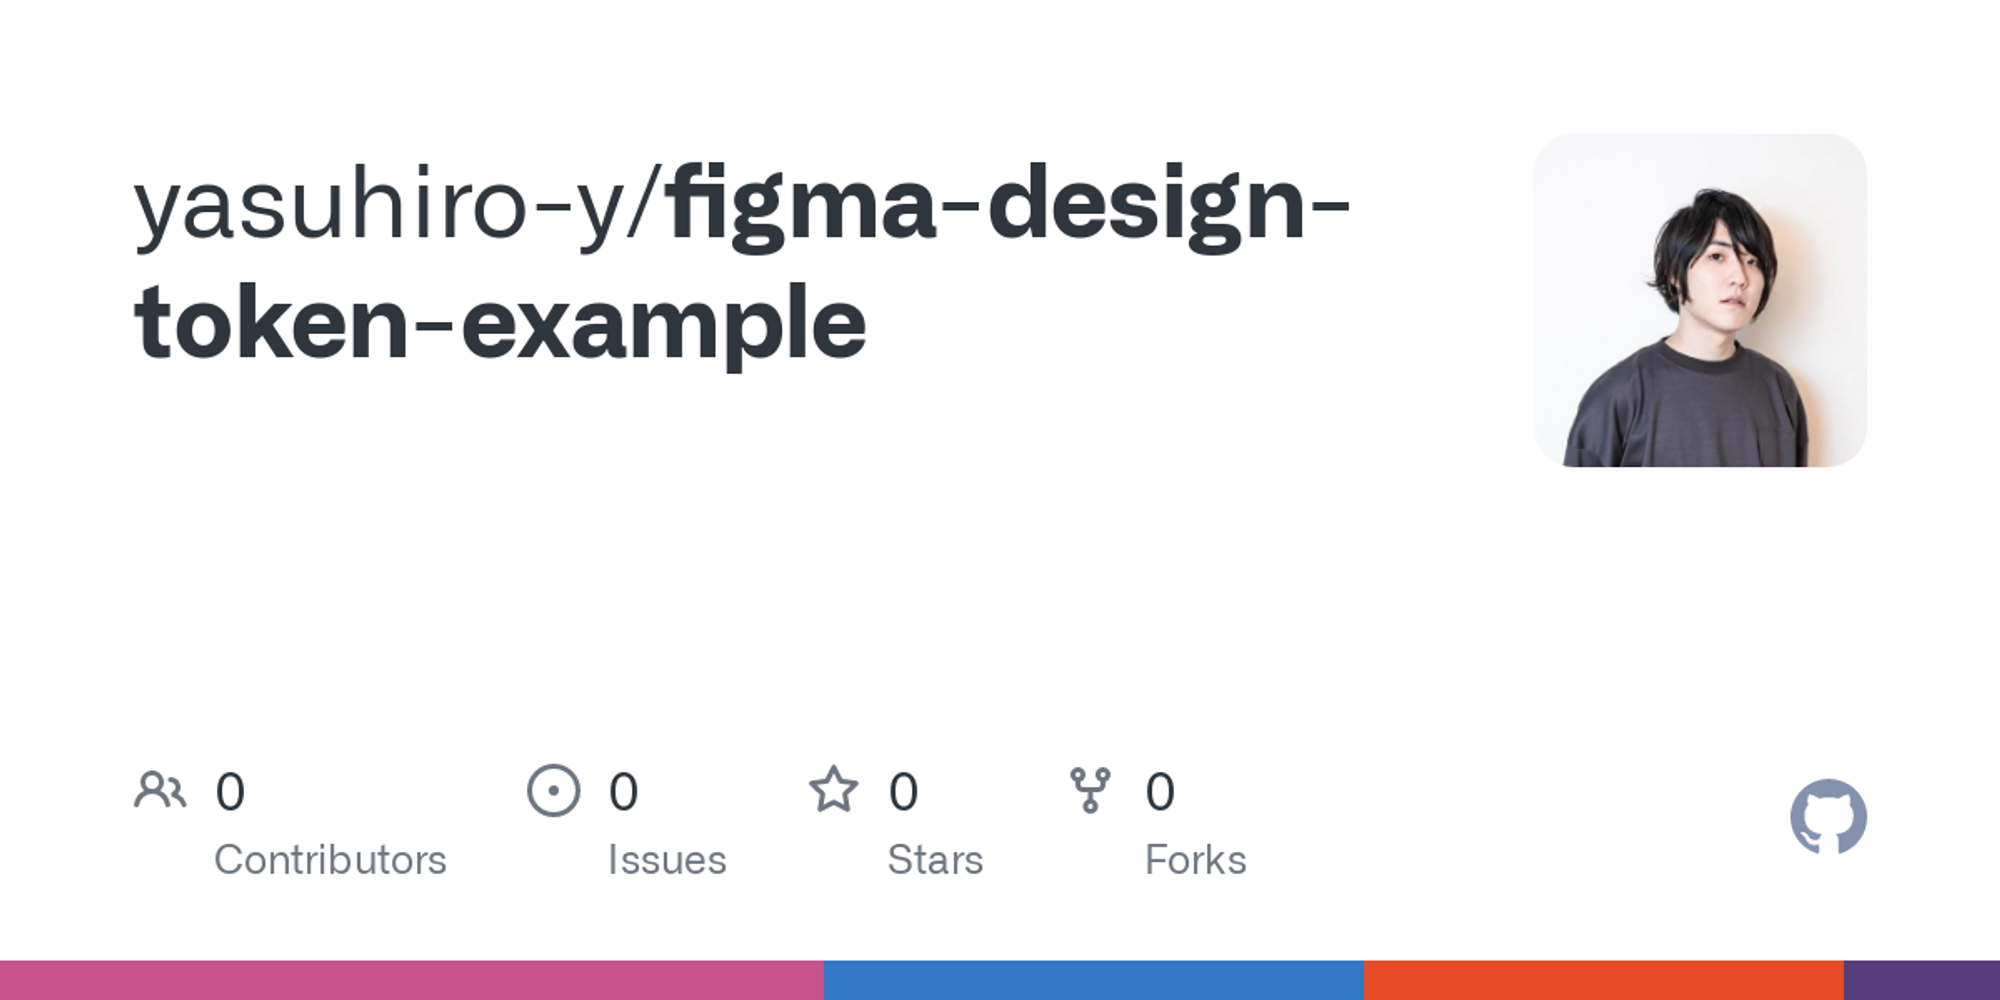 figma-design-token-example/src at main · yasuhiro-y/figma-design-token-example